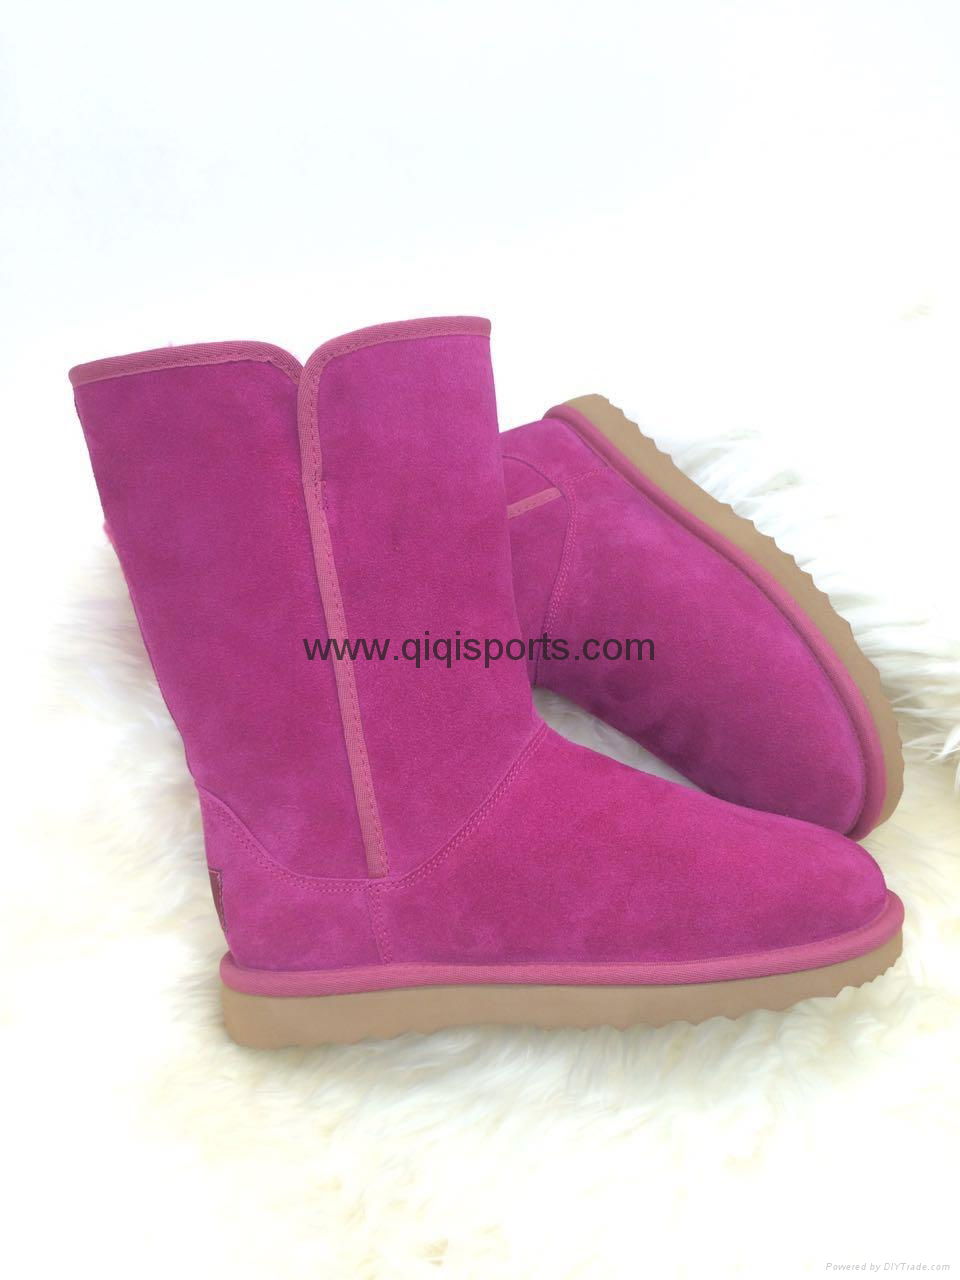 warm boots(qiqisports) 4